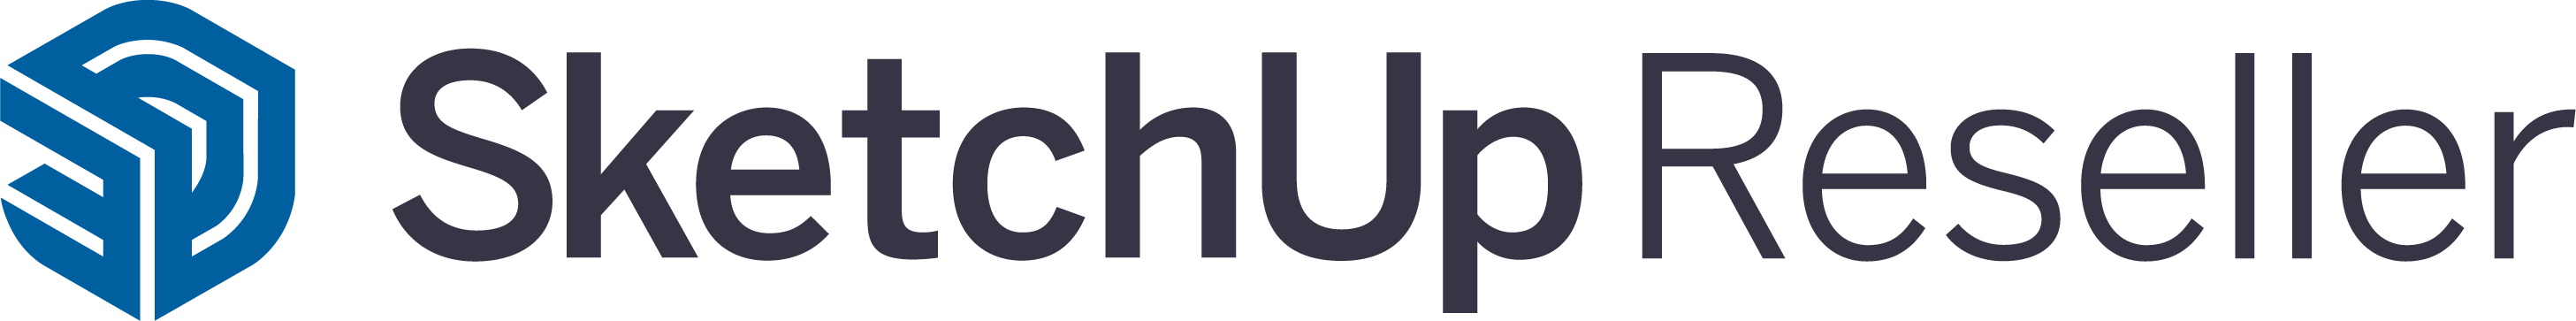 SketchUp-Reseller Logo